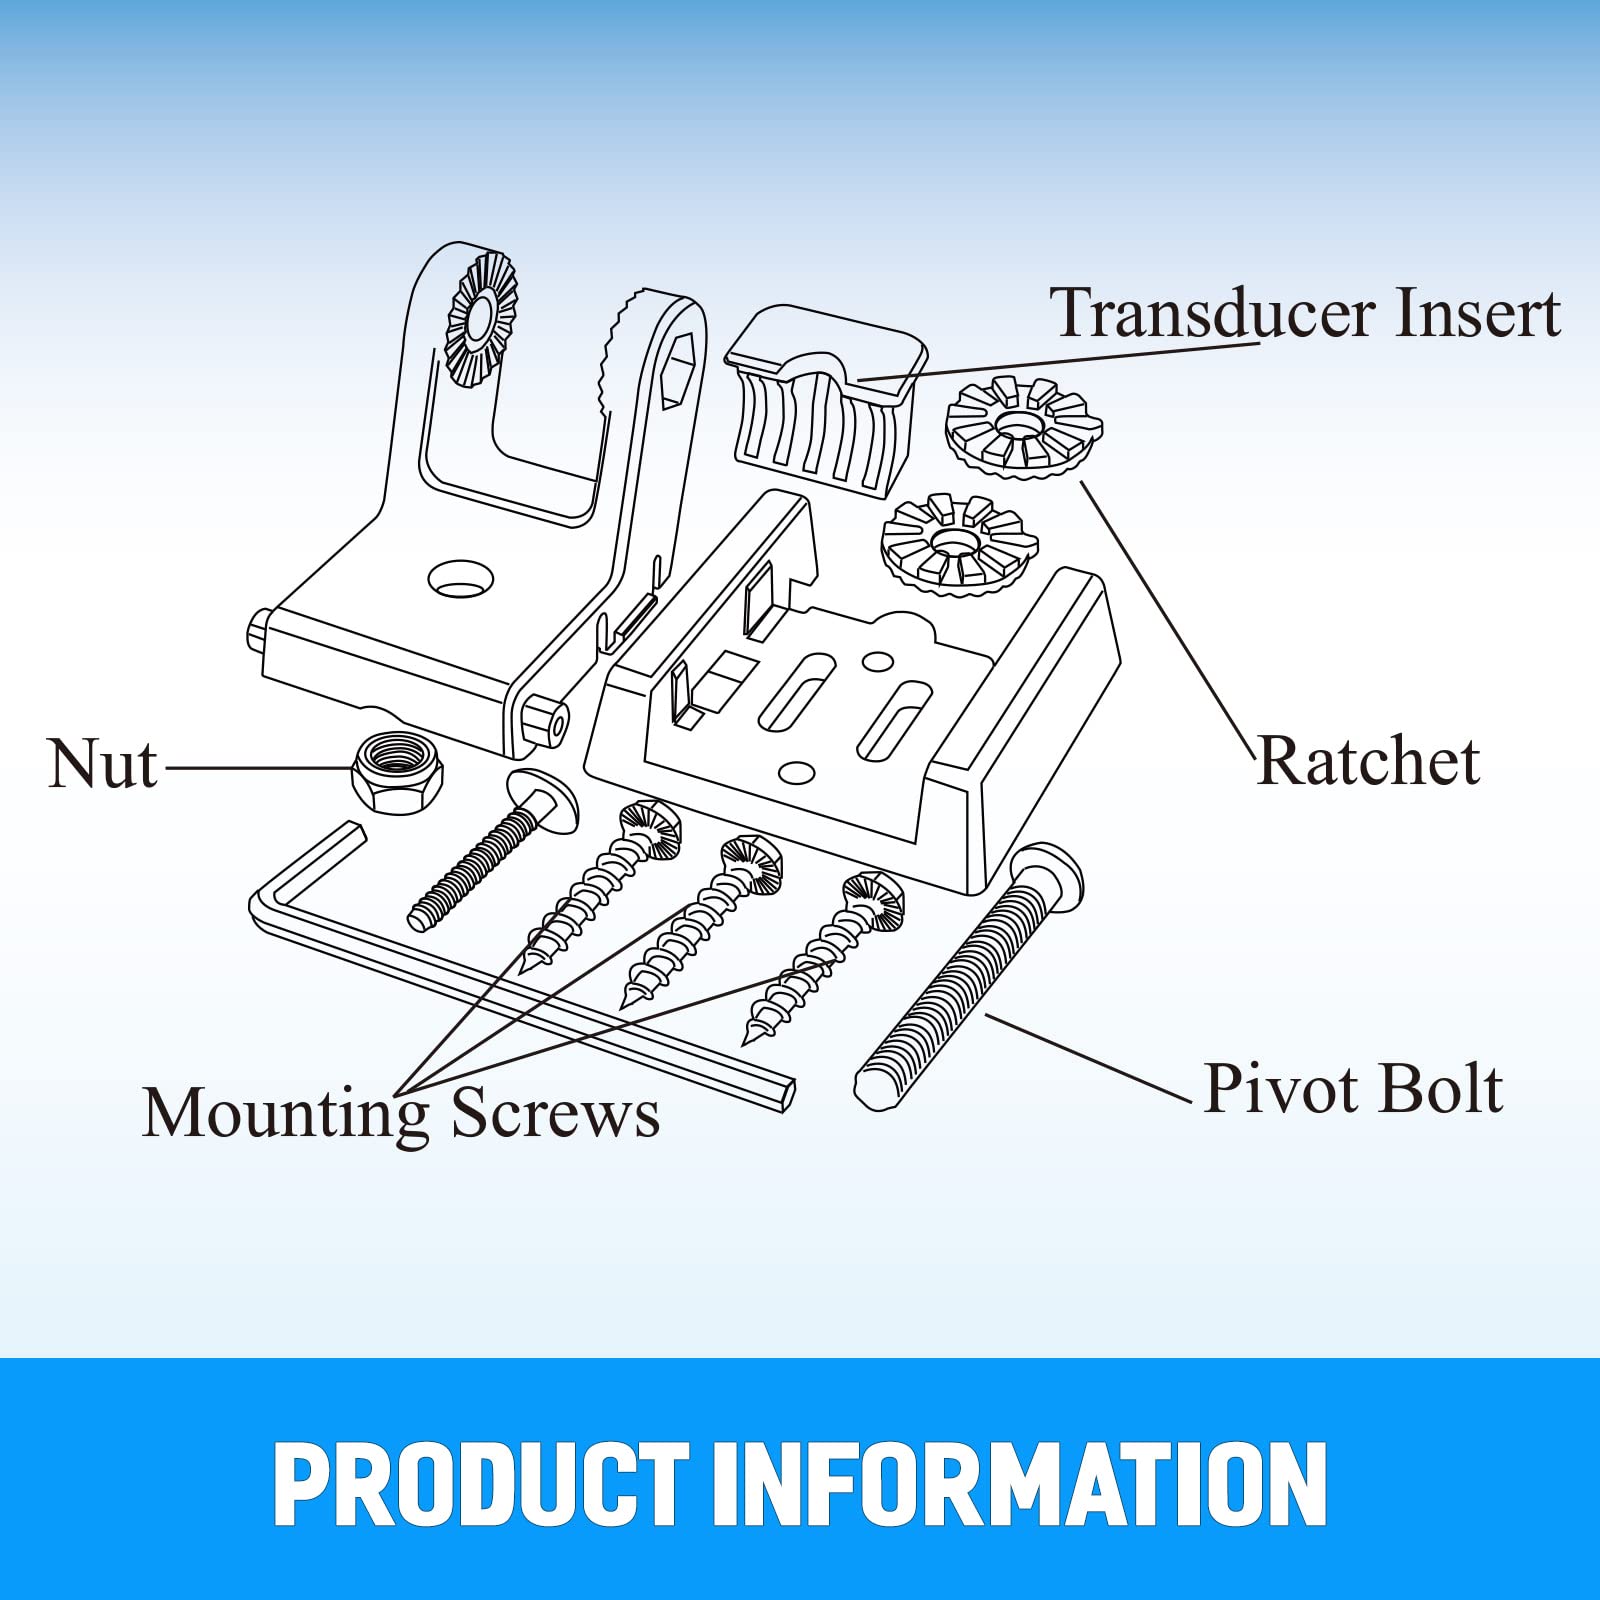 XNT Transducer Bracket, Transducer Mounting Plate for MHX XNT Model Transducers, 7400931 Transom Mounting Hardware Kit for MHX XNT Transducer Mount